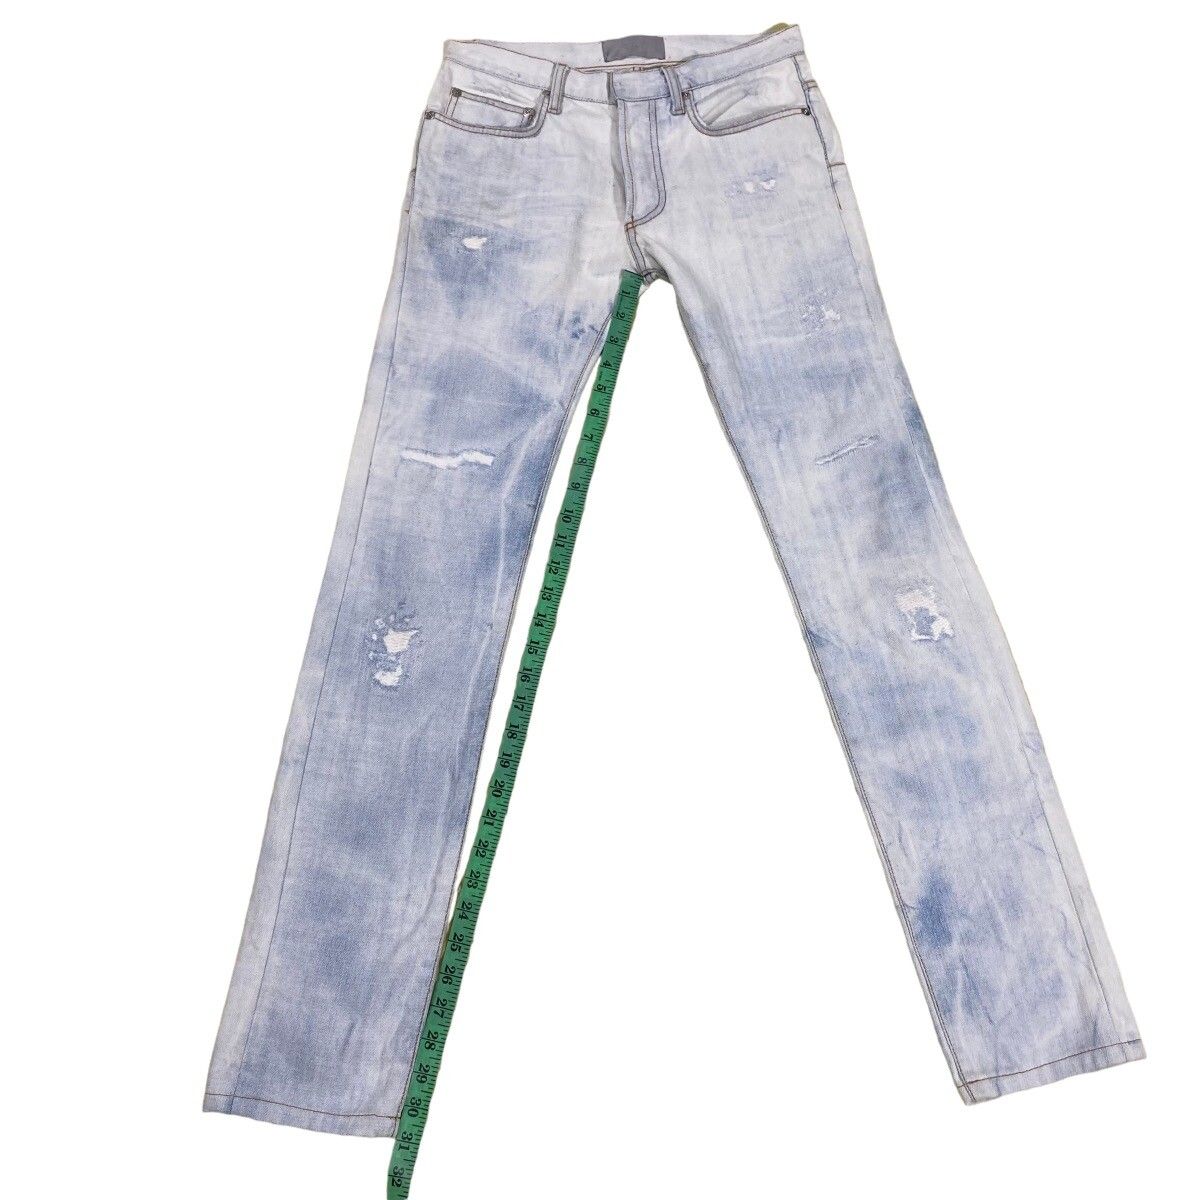 Dior Homme SS06 Dirty Snow Denim Jeans - 25